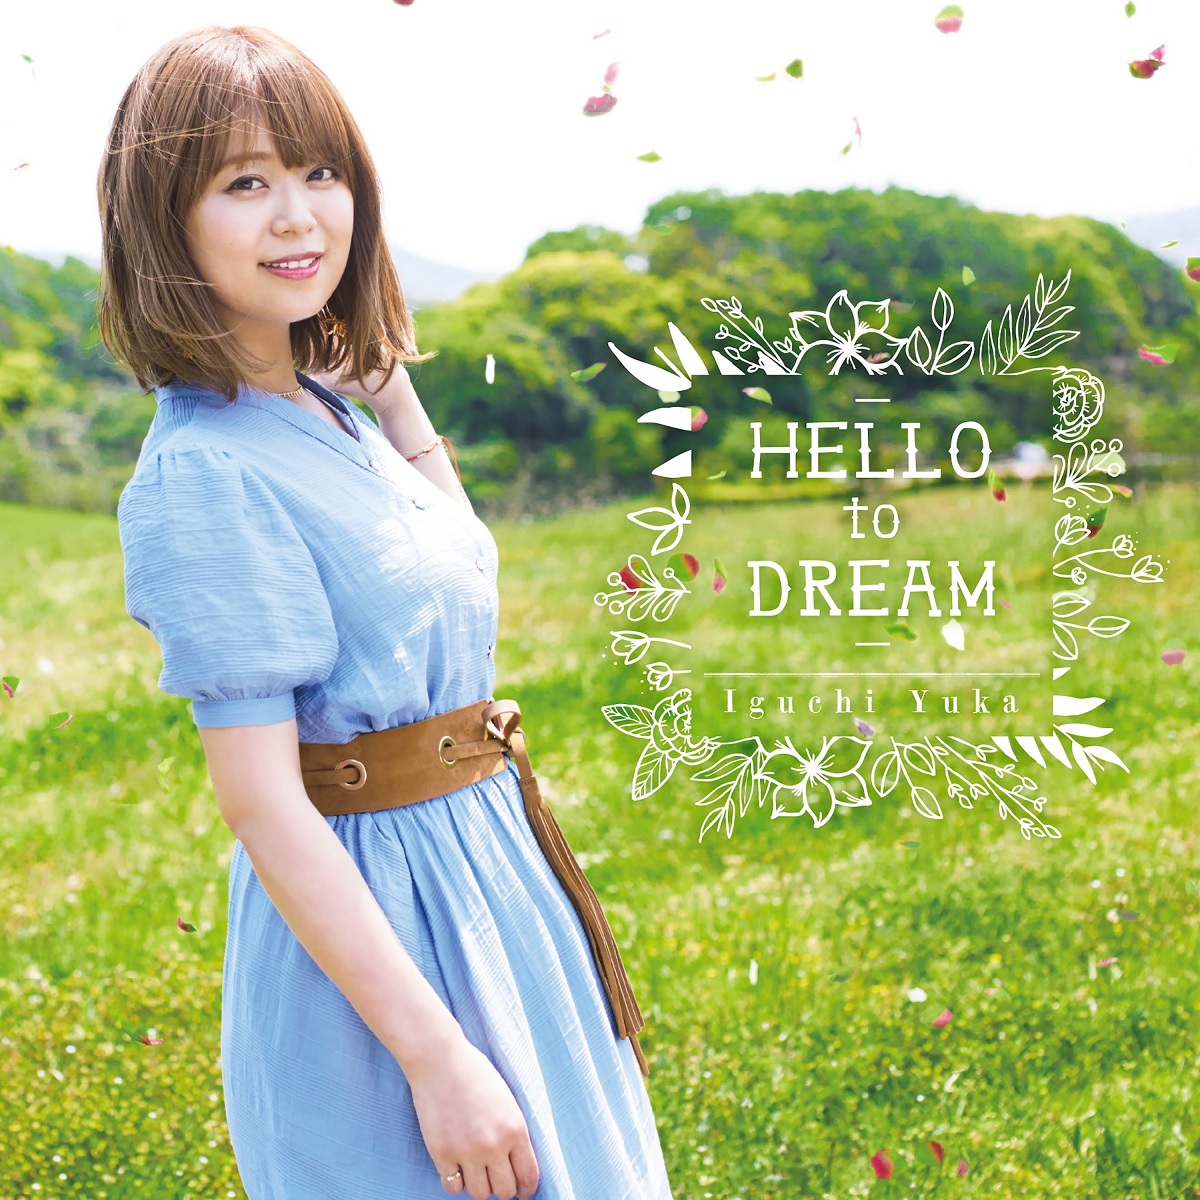 Cover art for『Yuka Iguchi - HELLO to DREAM』from the release『HELLO to DREAM』